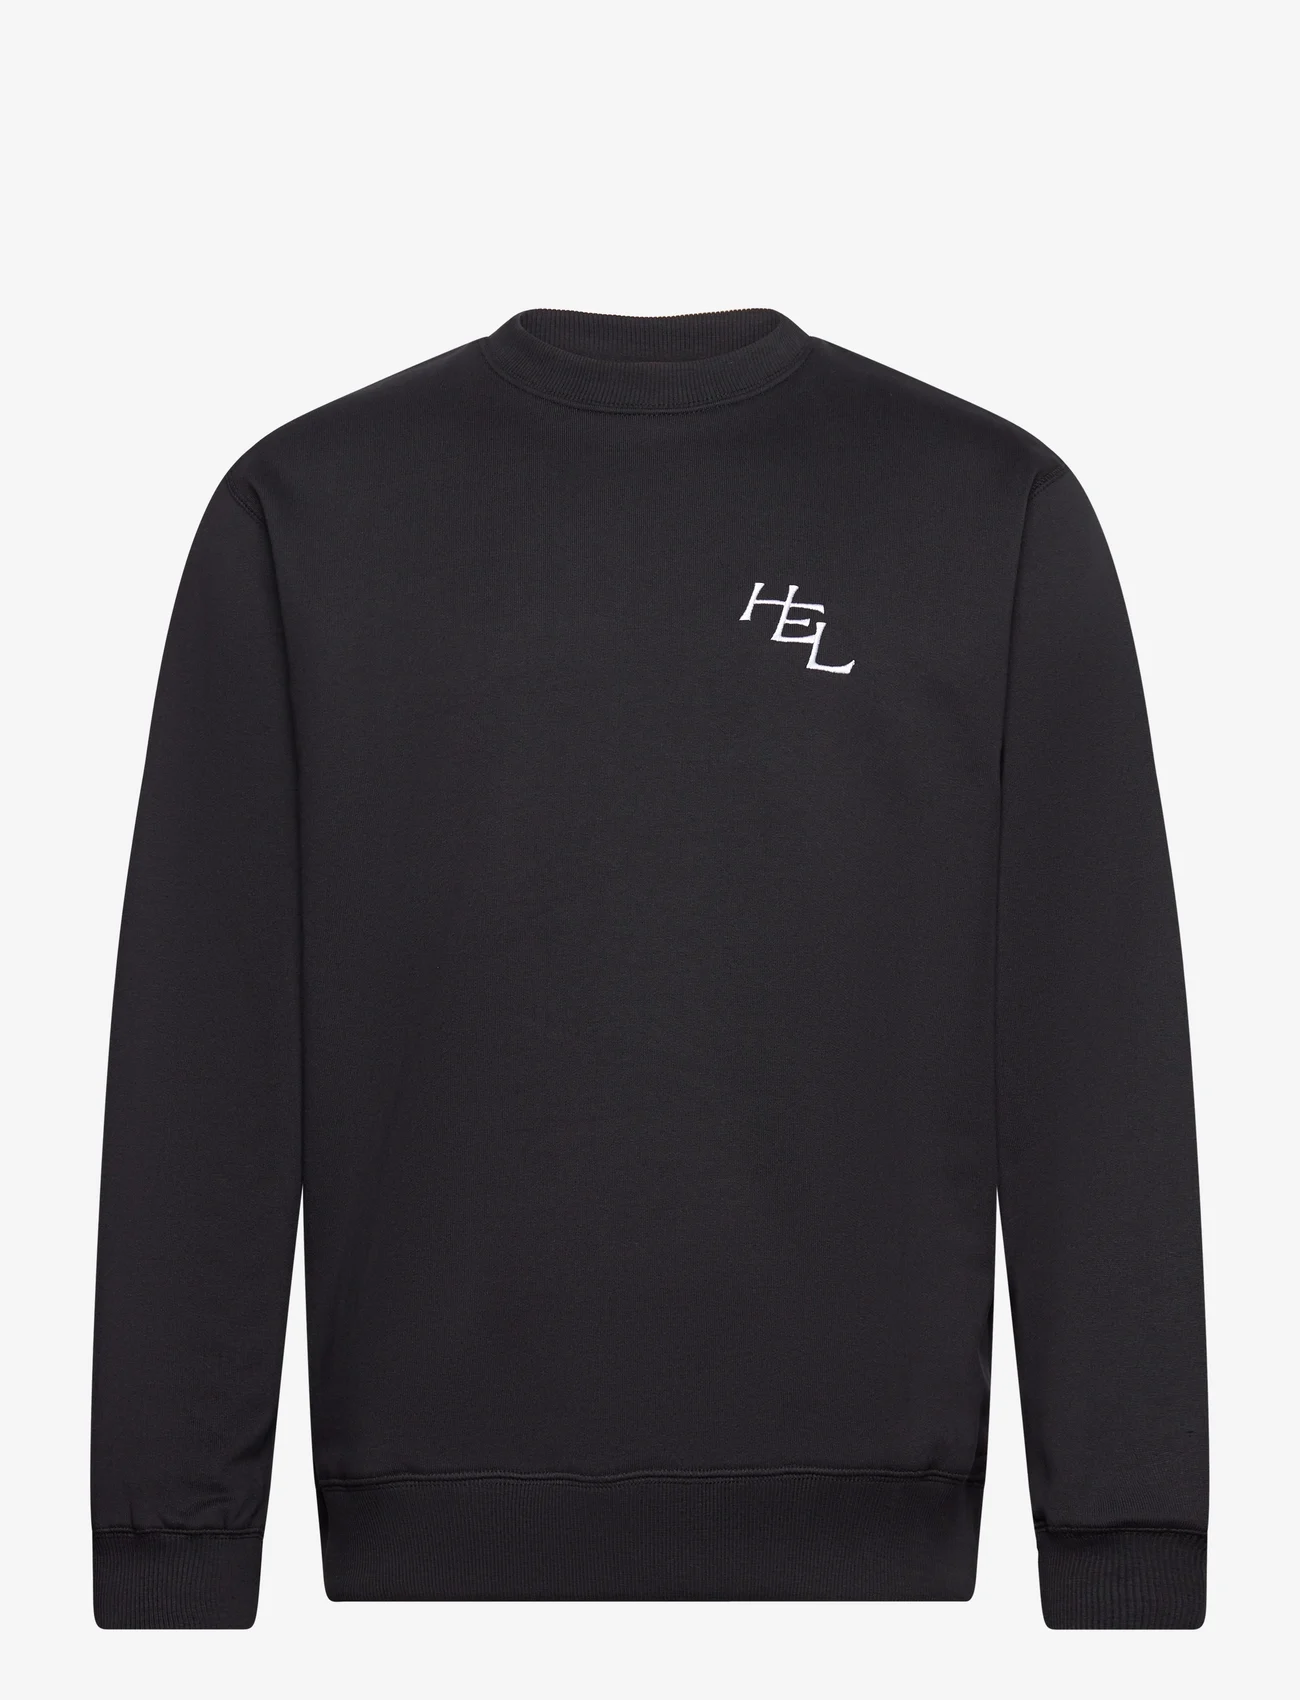 Makia - Hel Sweatshirt - t-shirts - black - 0